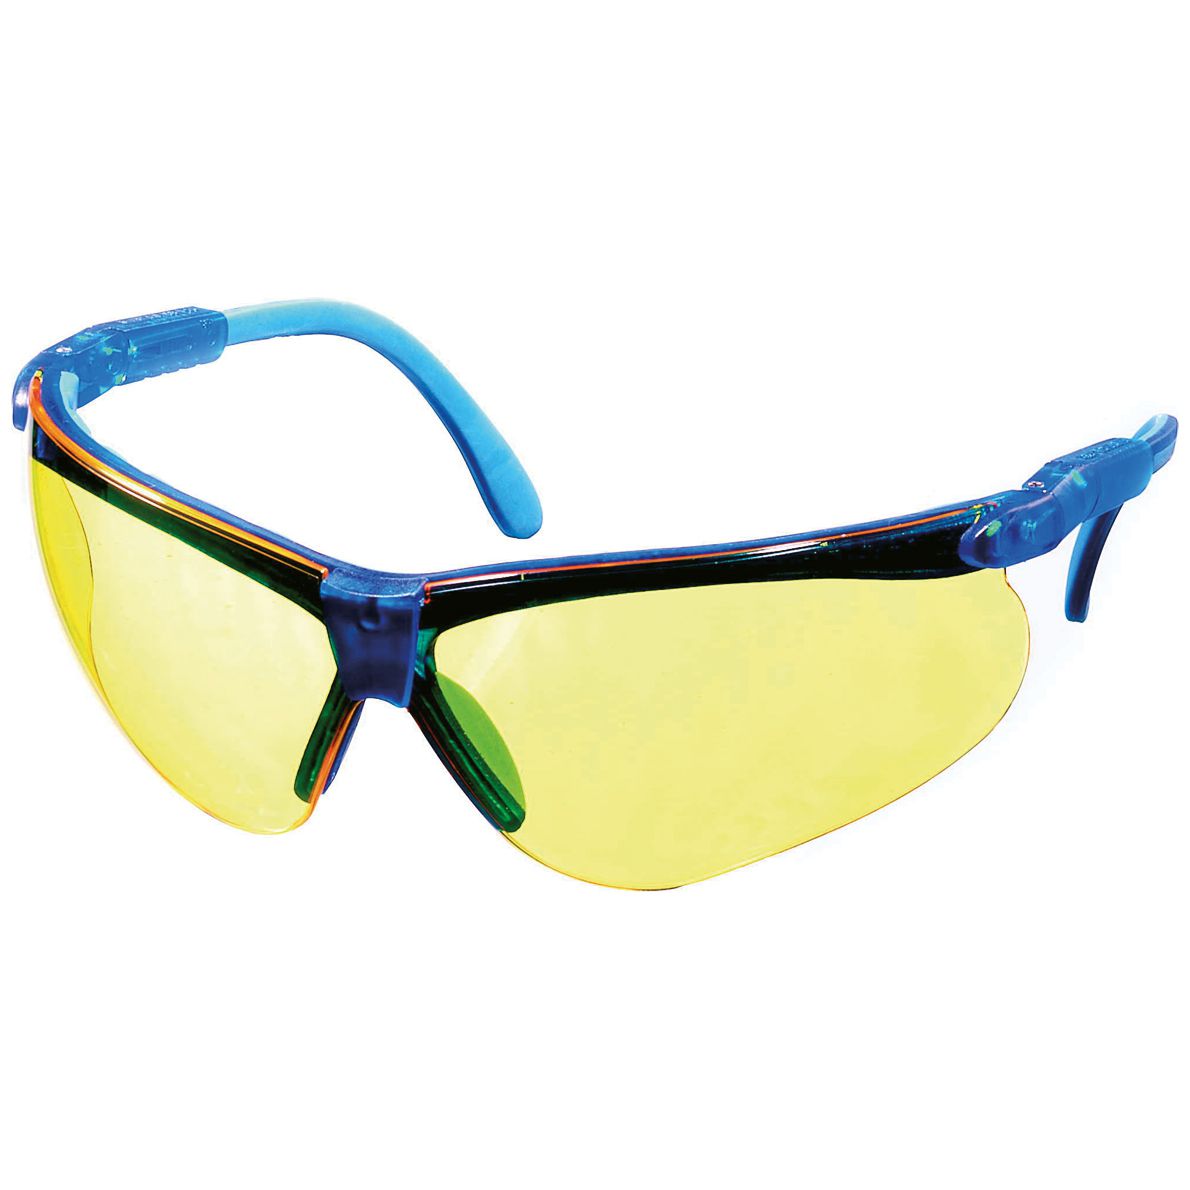 MSA Perspecta 010 Schutzbrille - kratz- & beschlagfest dank Sightgard-Beschichtung - EN 166/170 - Blau/Gelb